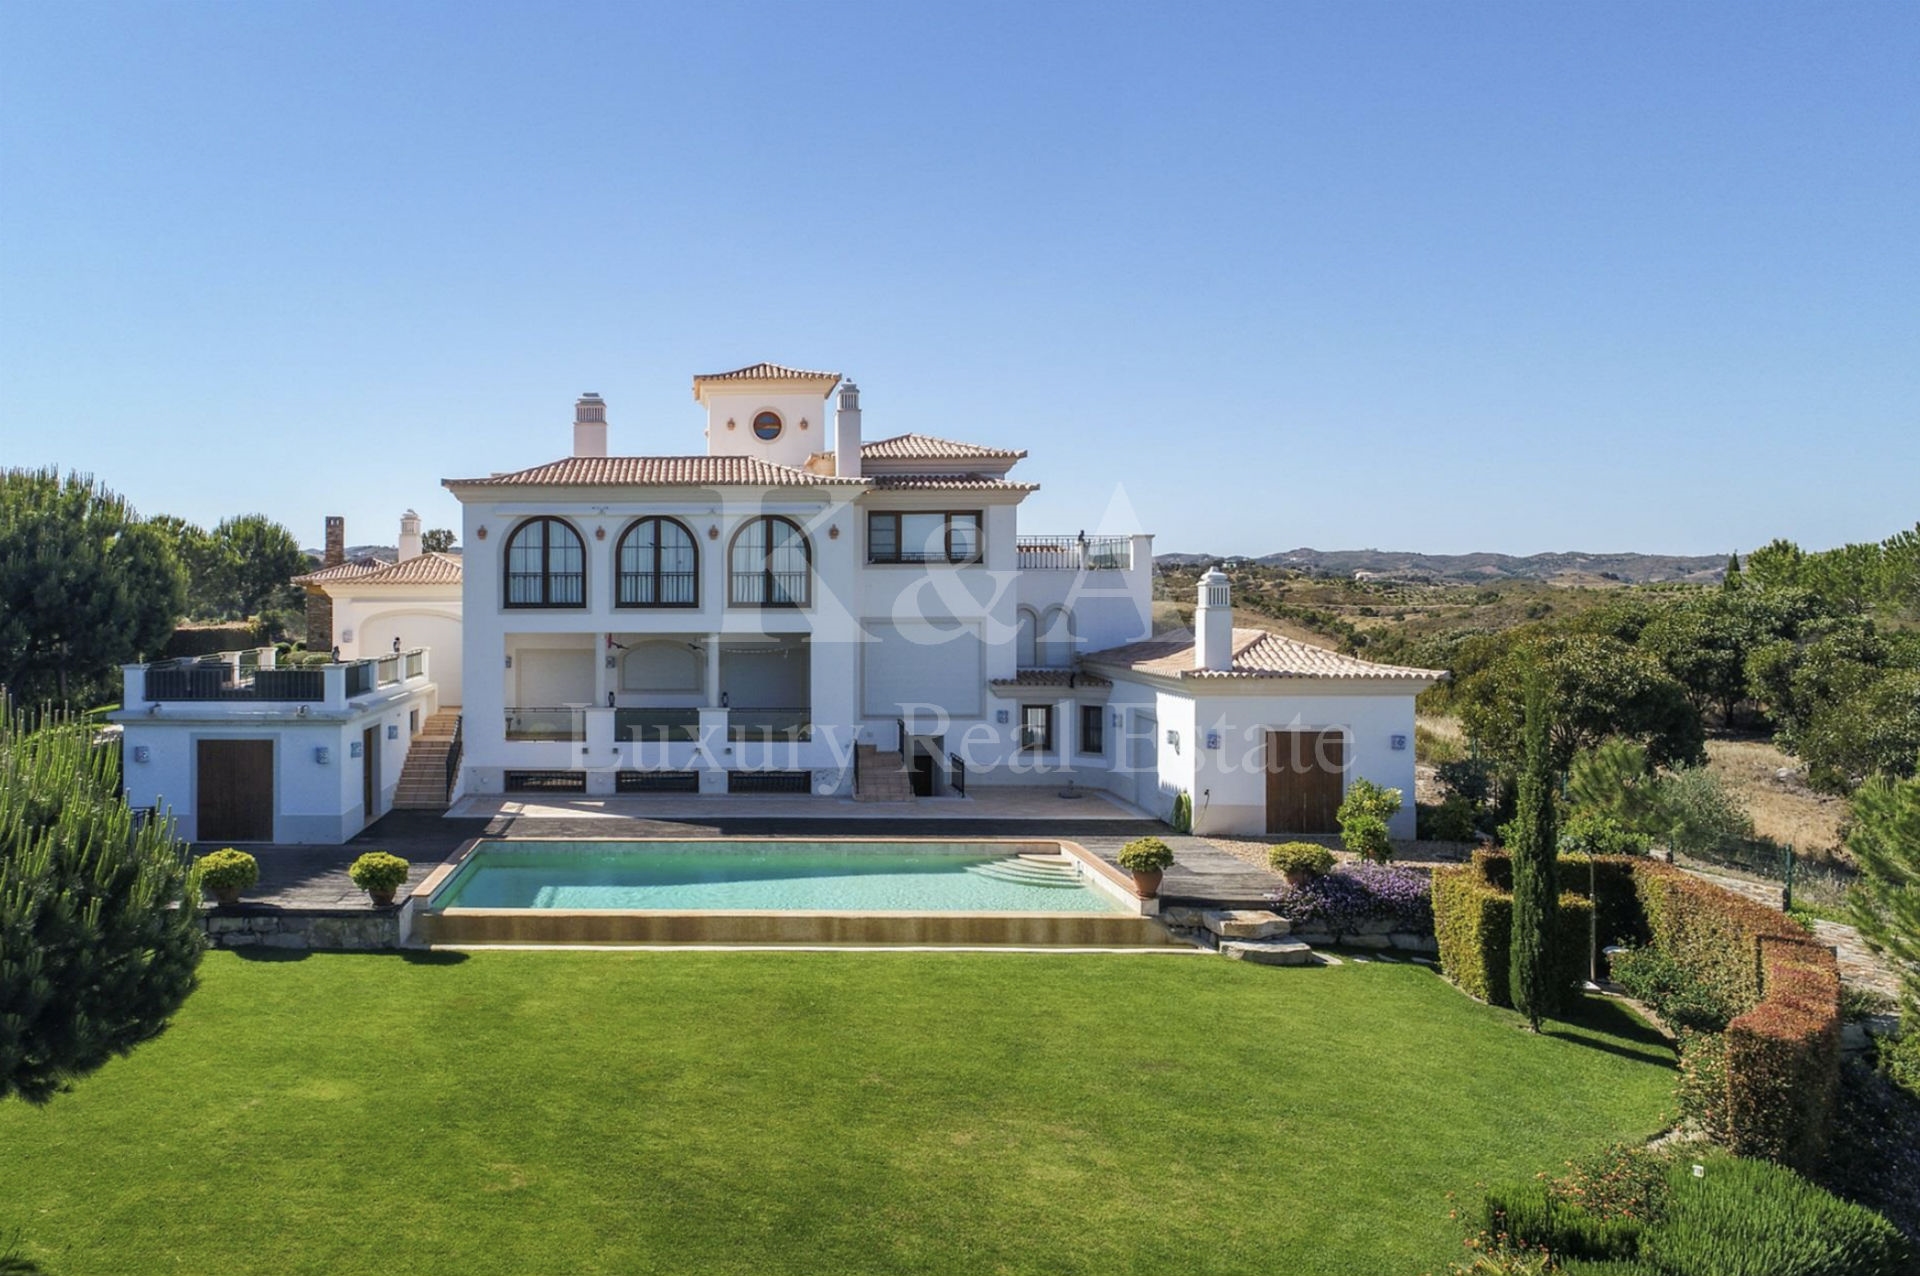 6 Bedroom Villa in an exclusive golf resort, Algarve